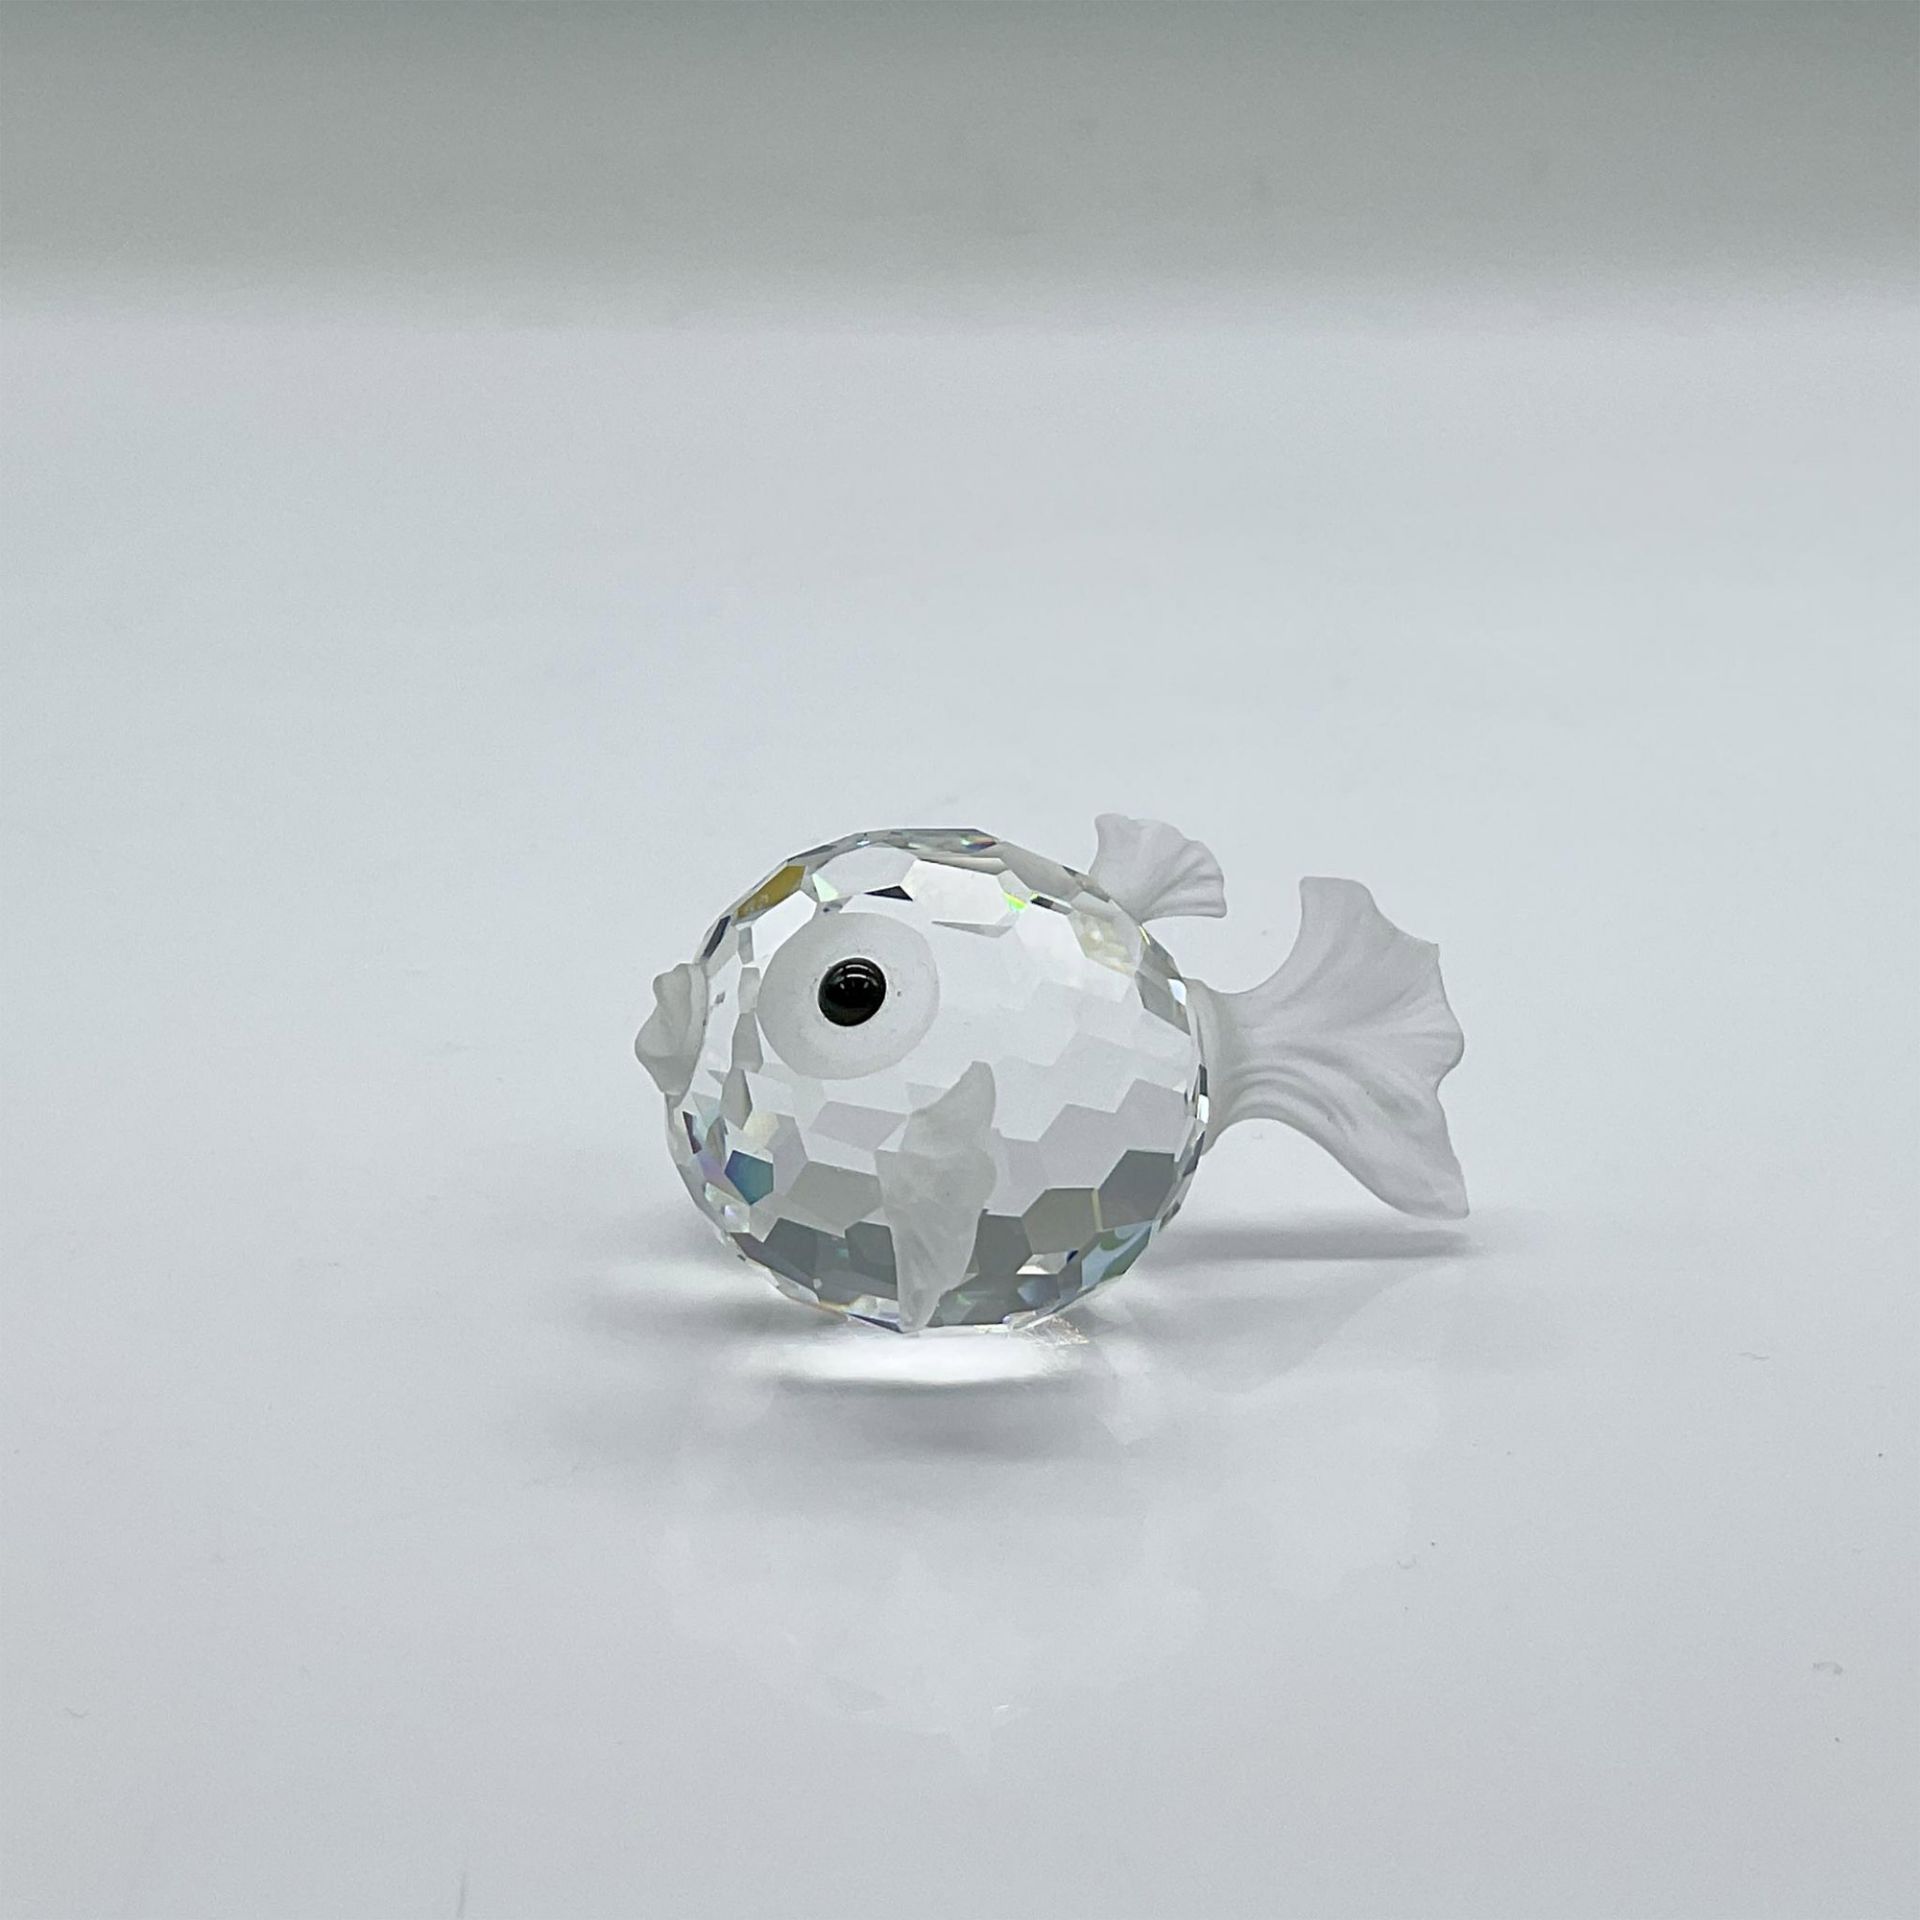 Swarovski Silver Crystal Figurine, Small Blowfish - Image 3 of 6